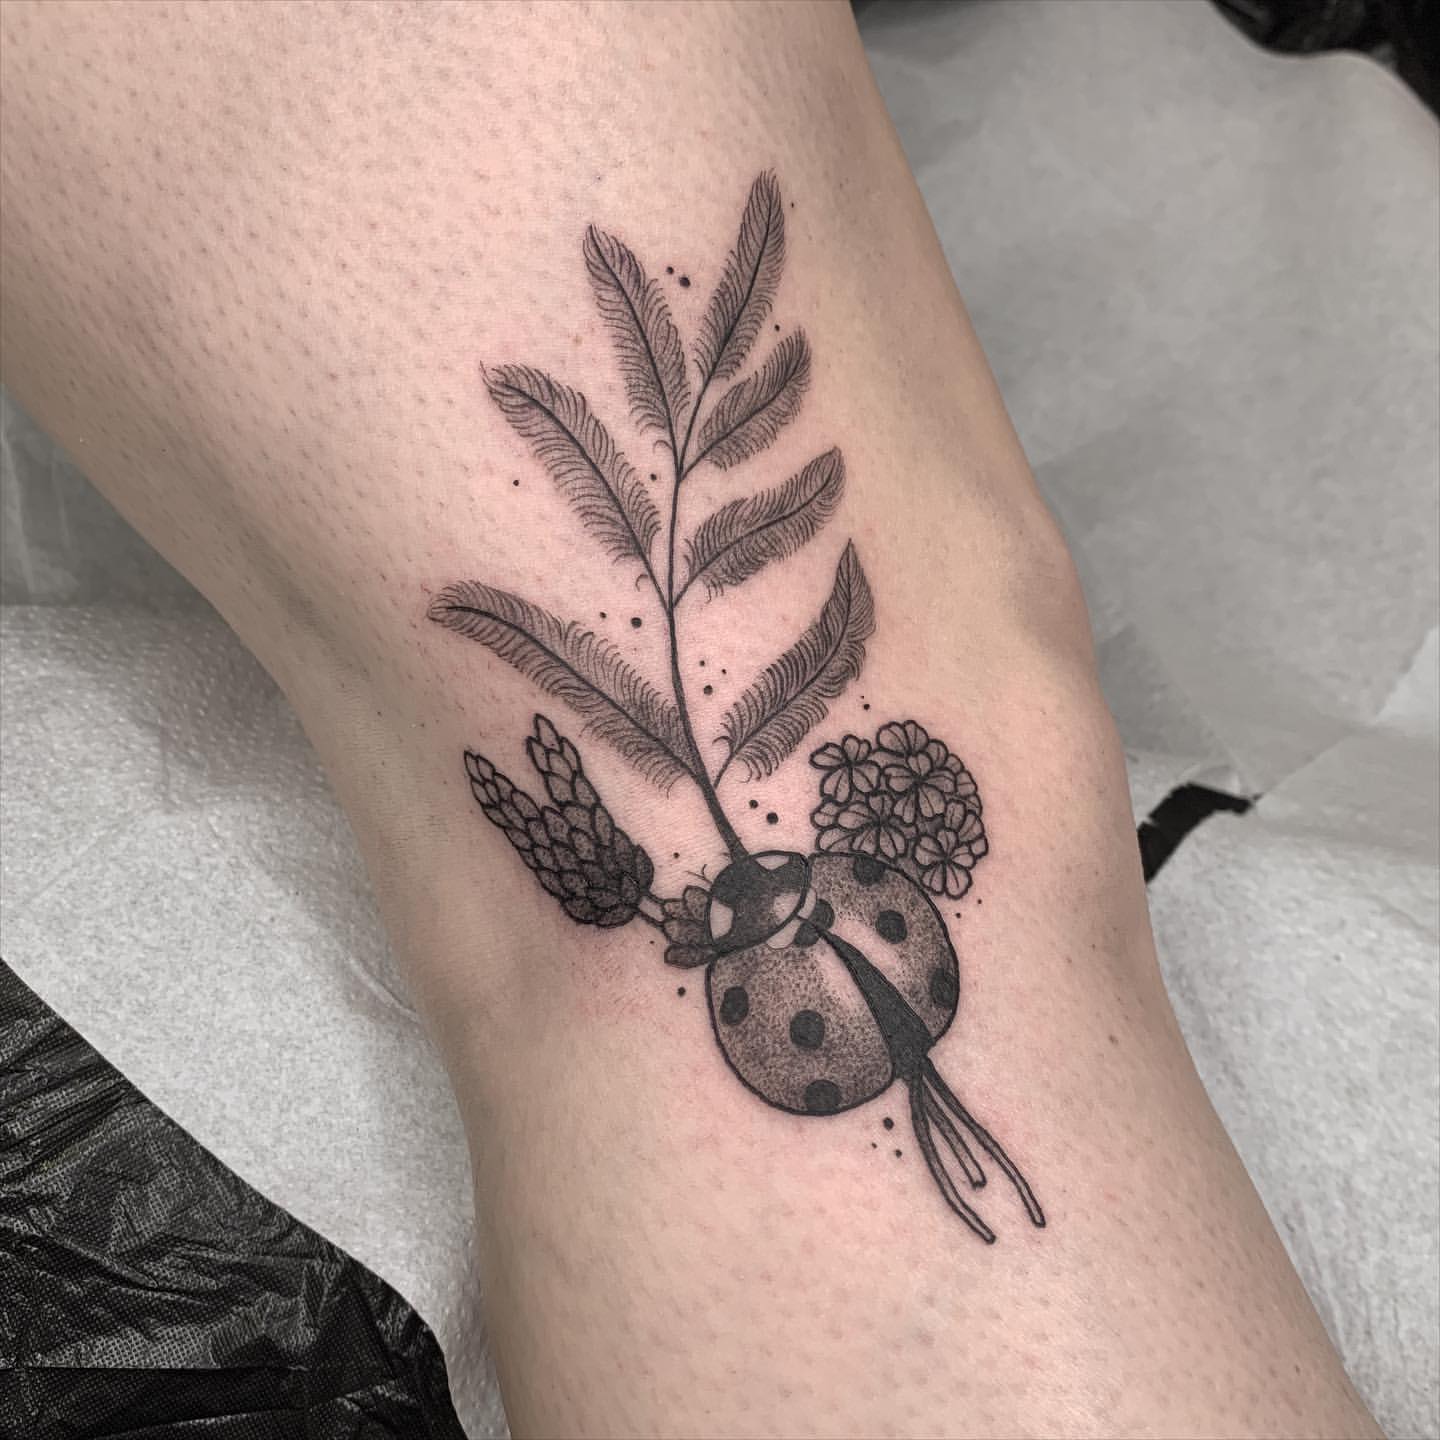 domenique gordon share ladybug tattoo black and white photos